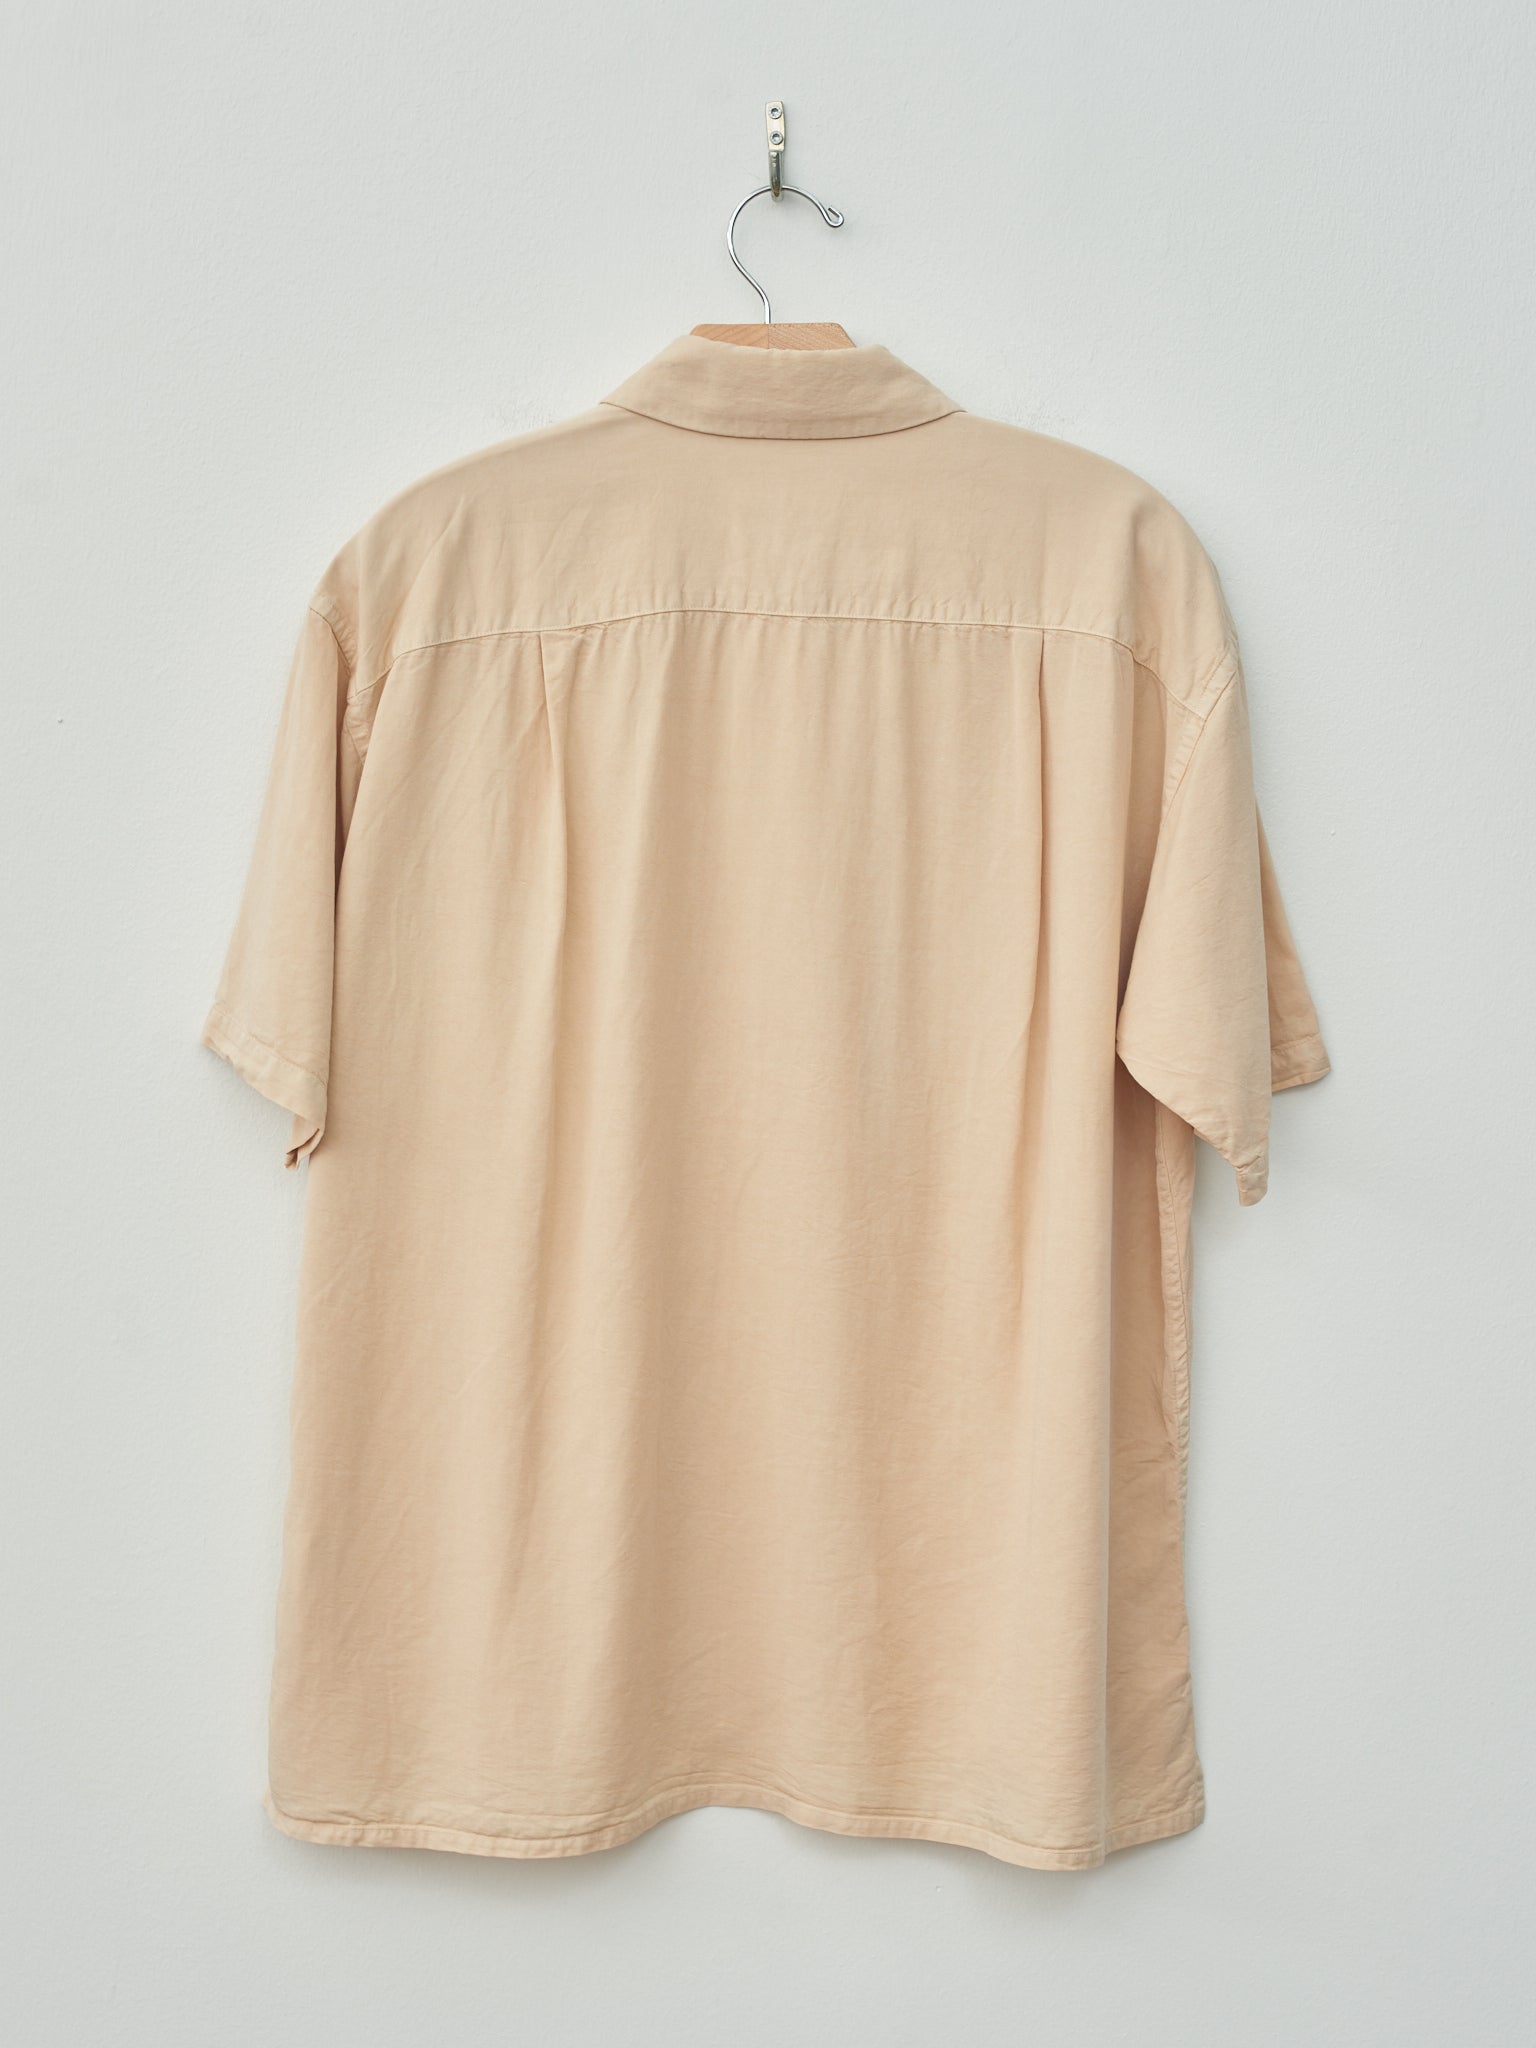 Namu Shop - ts(s) Garment Dye Round Flap Pocket S/S Shirt - Cream